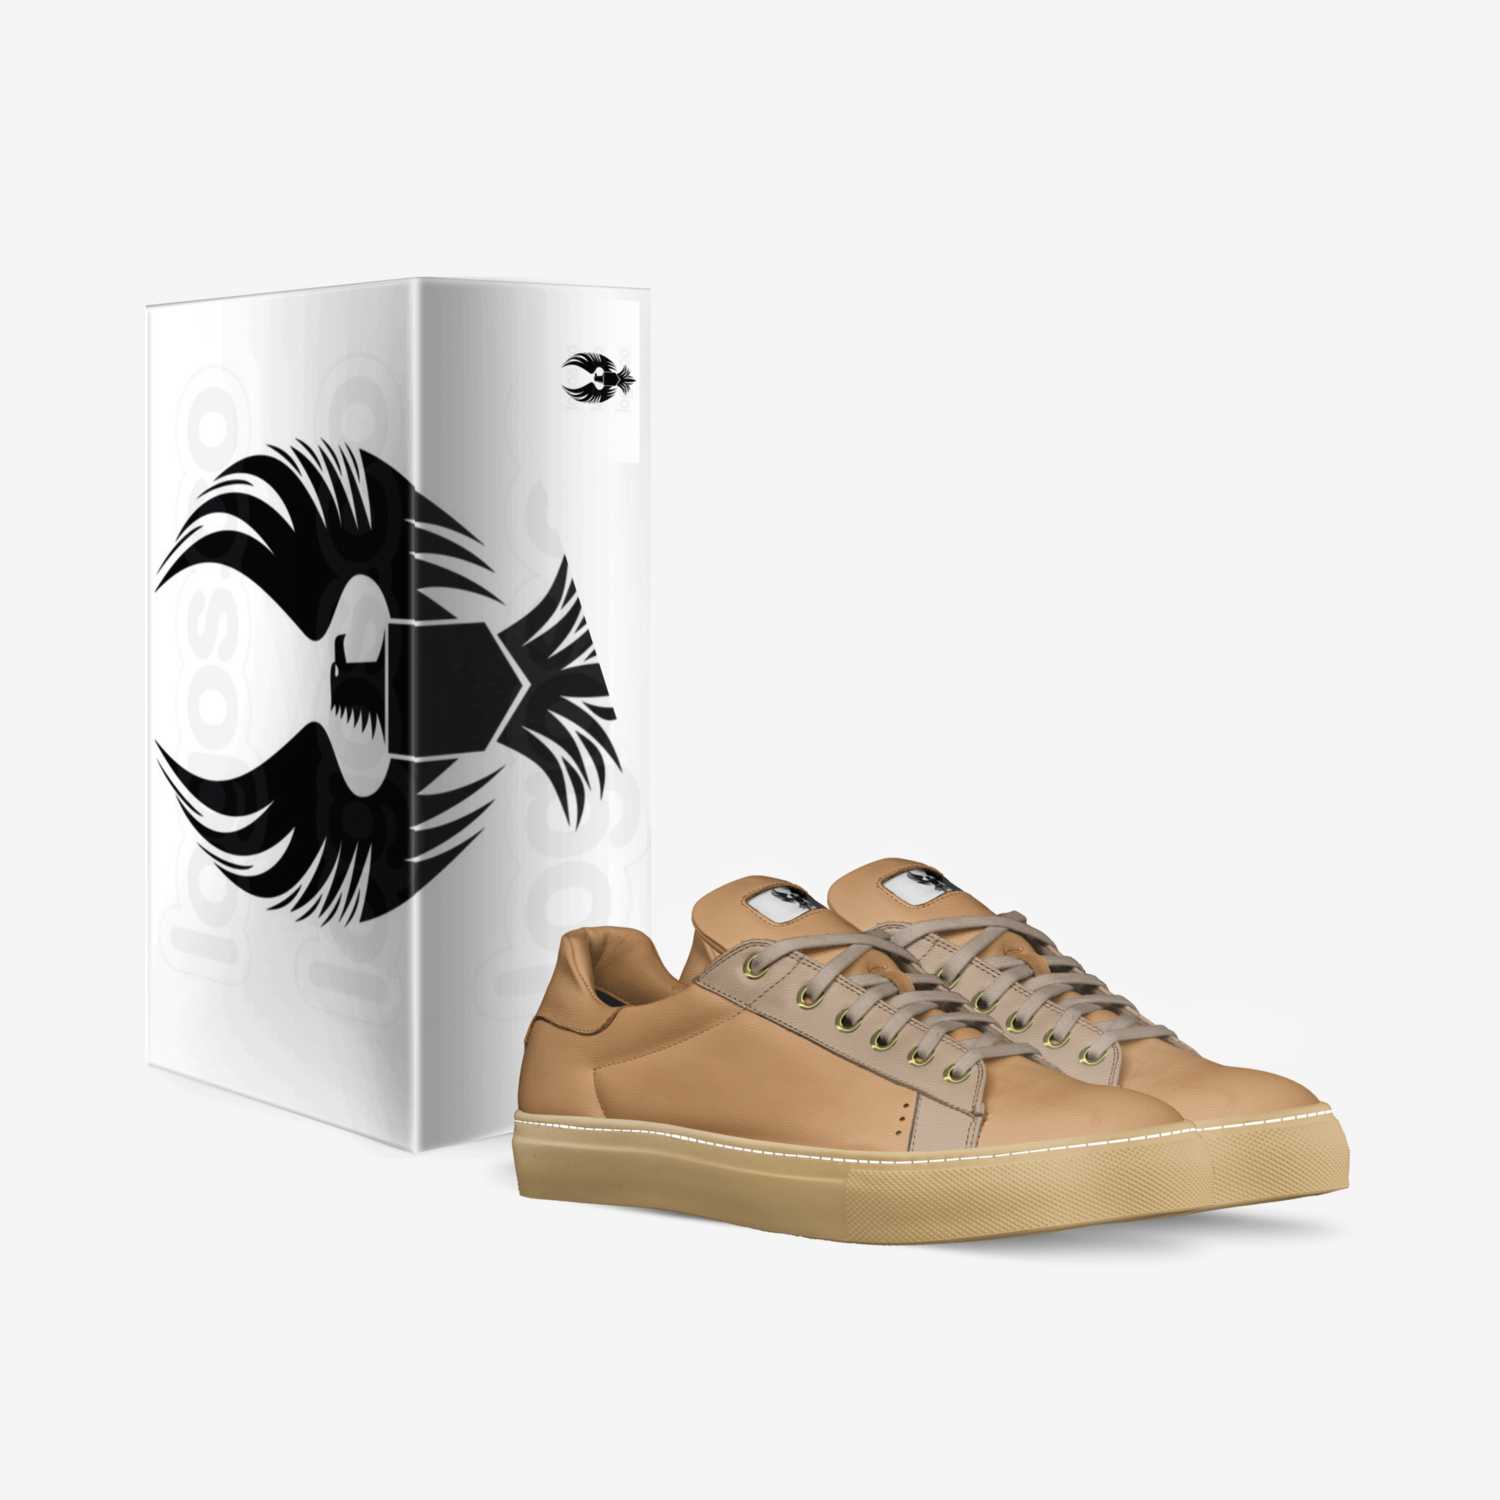 KAZA1s custom made in Italy shoes by Kaza Gray | Box view